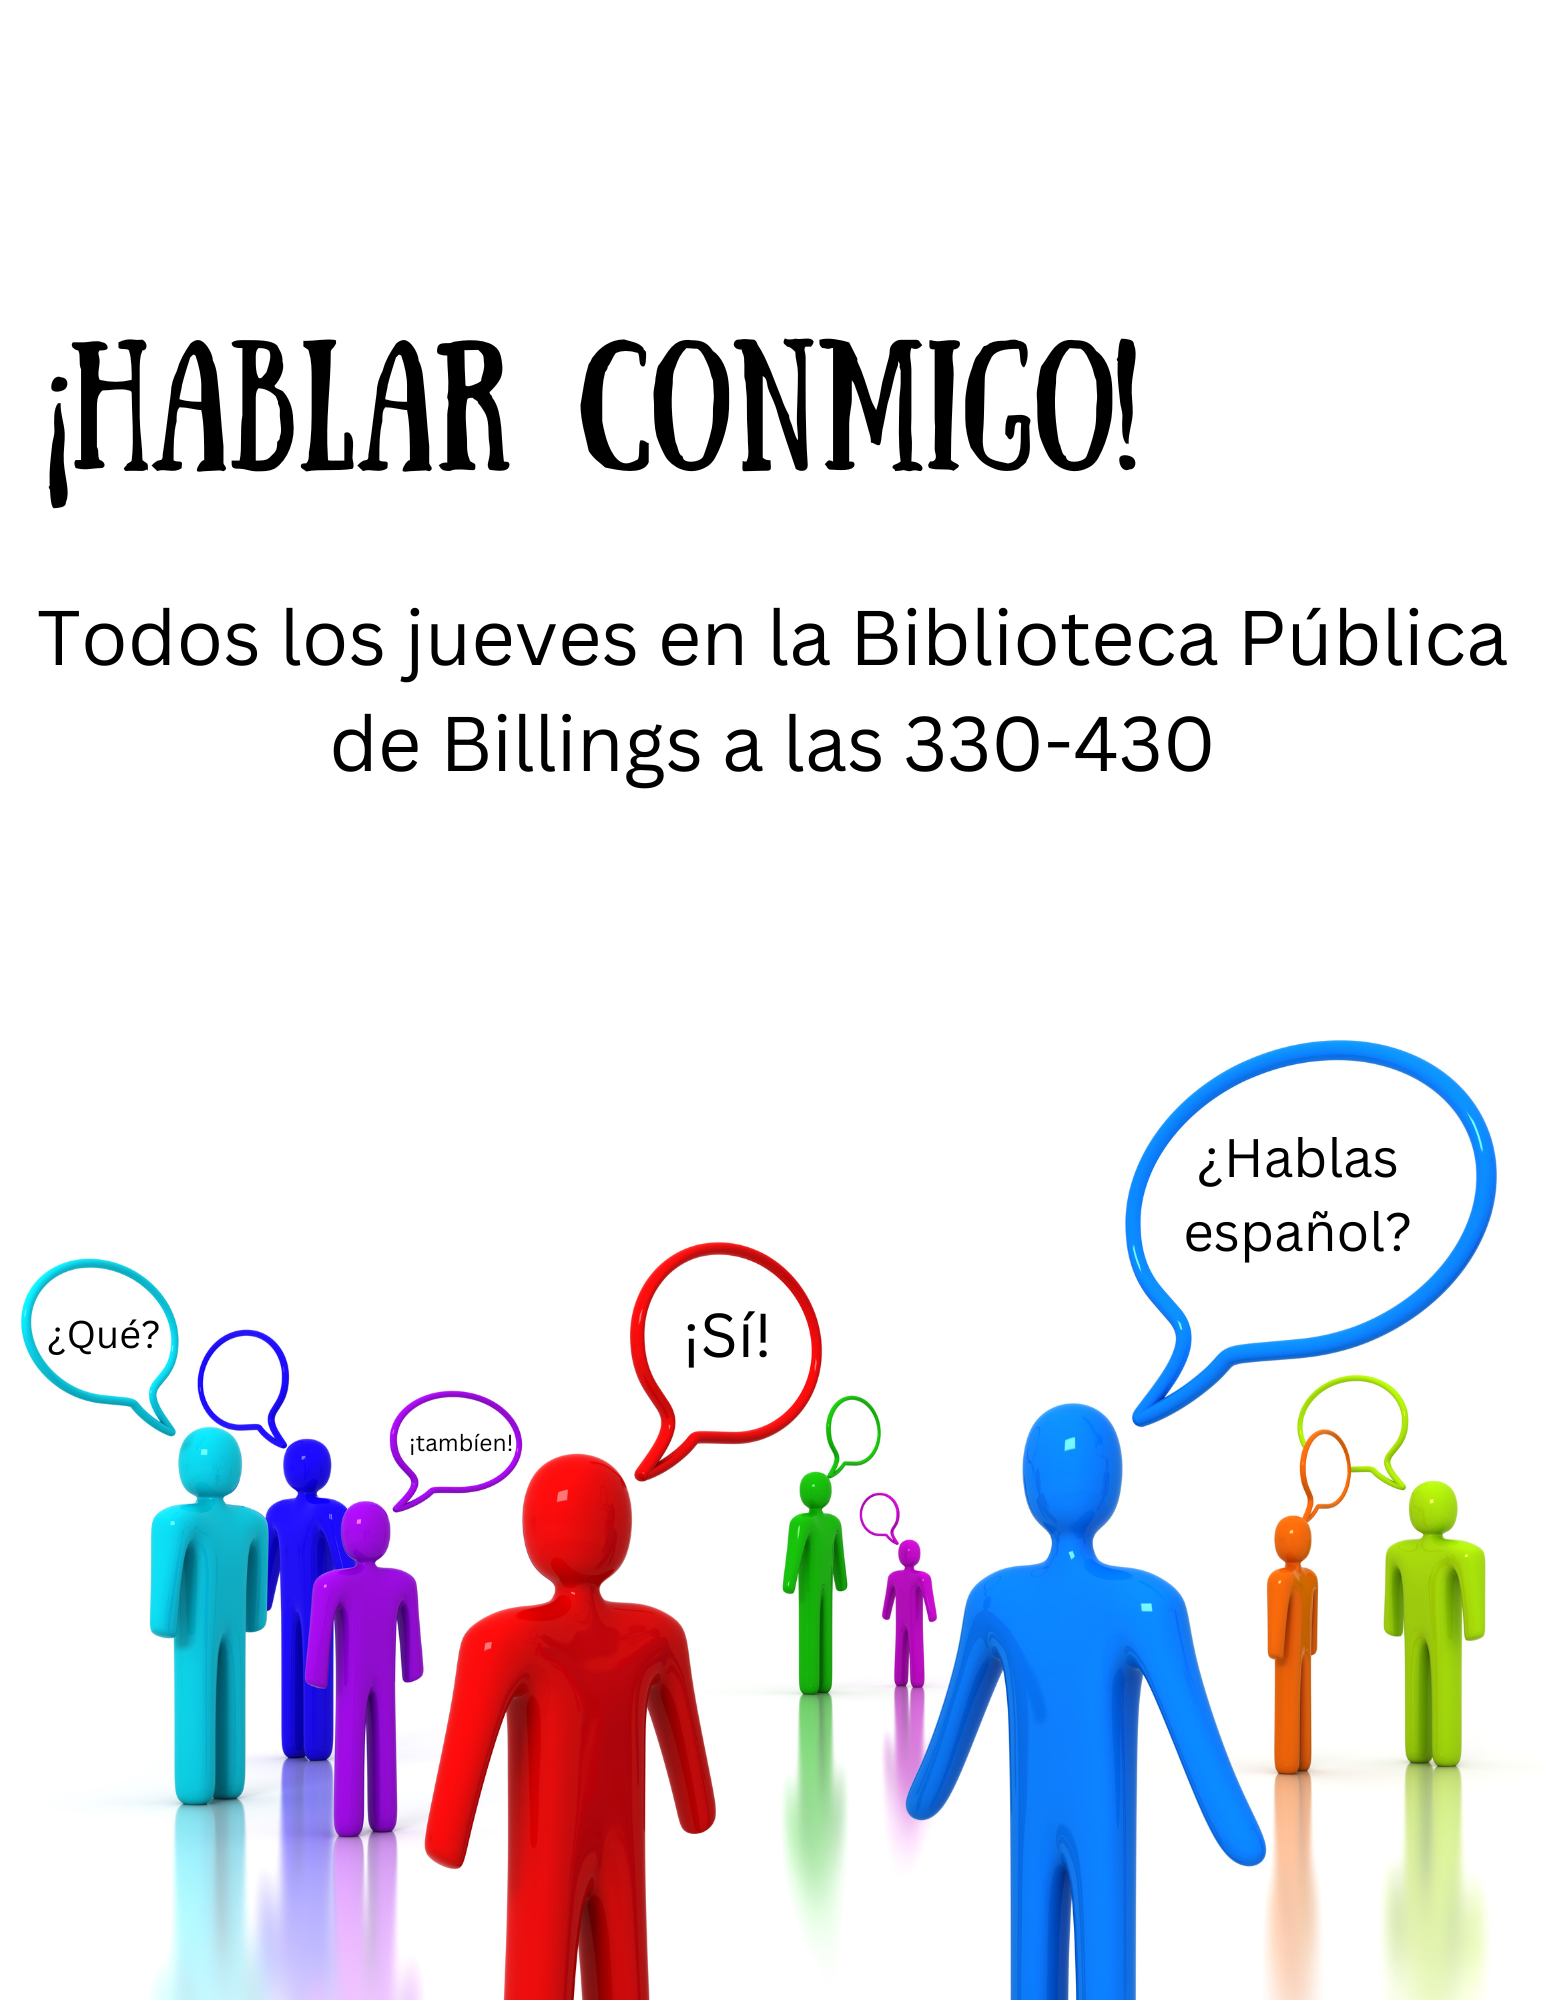 ¡Hablar Conmigo! Program at the BPL from 330-430 Thursdays